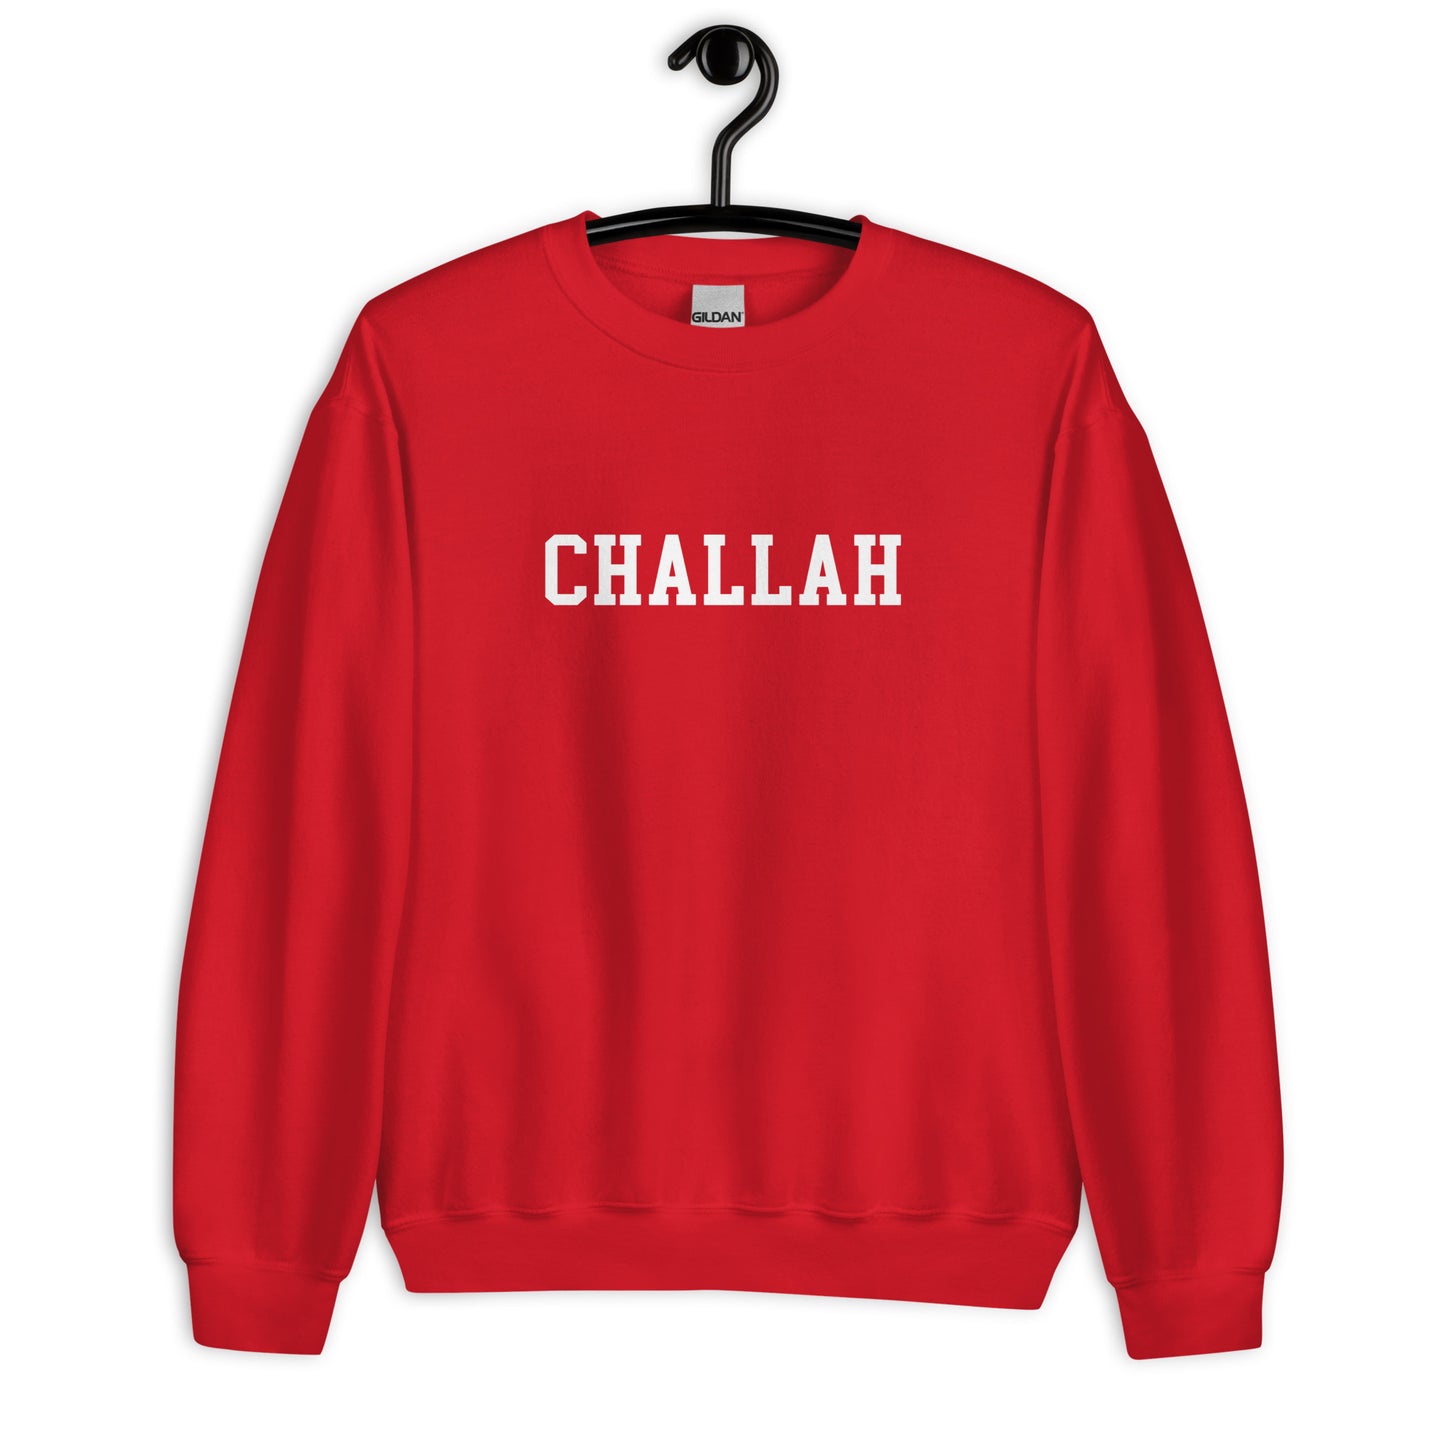 Challah Sweatshirt - Straight Font